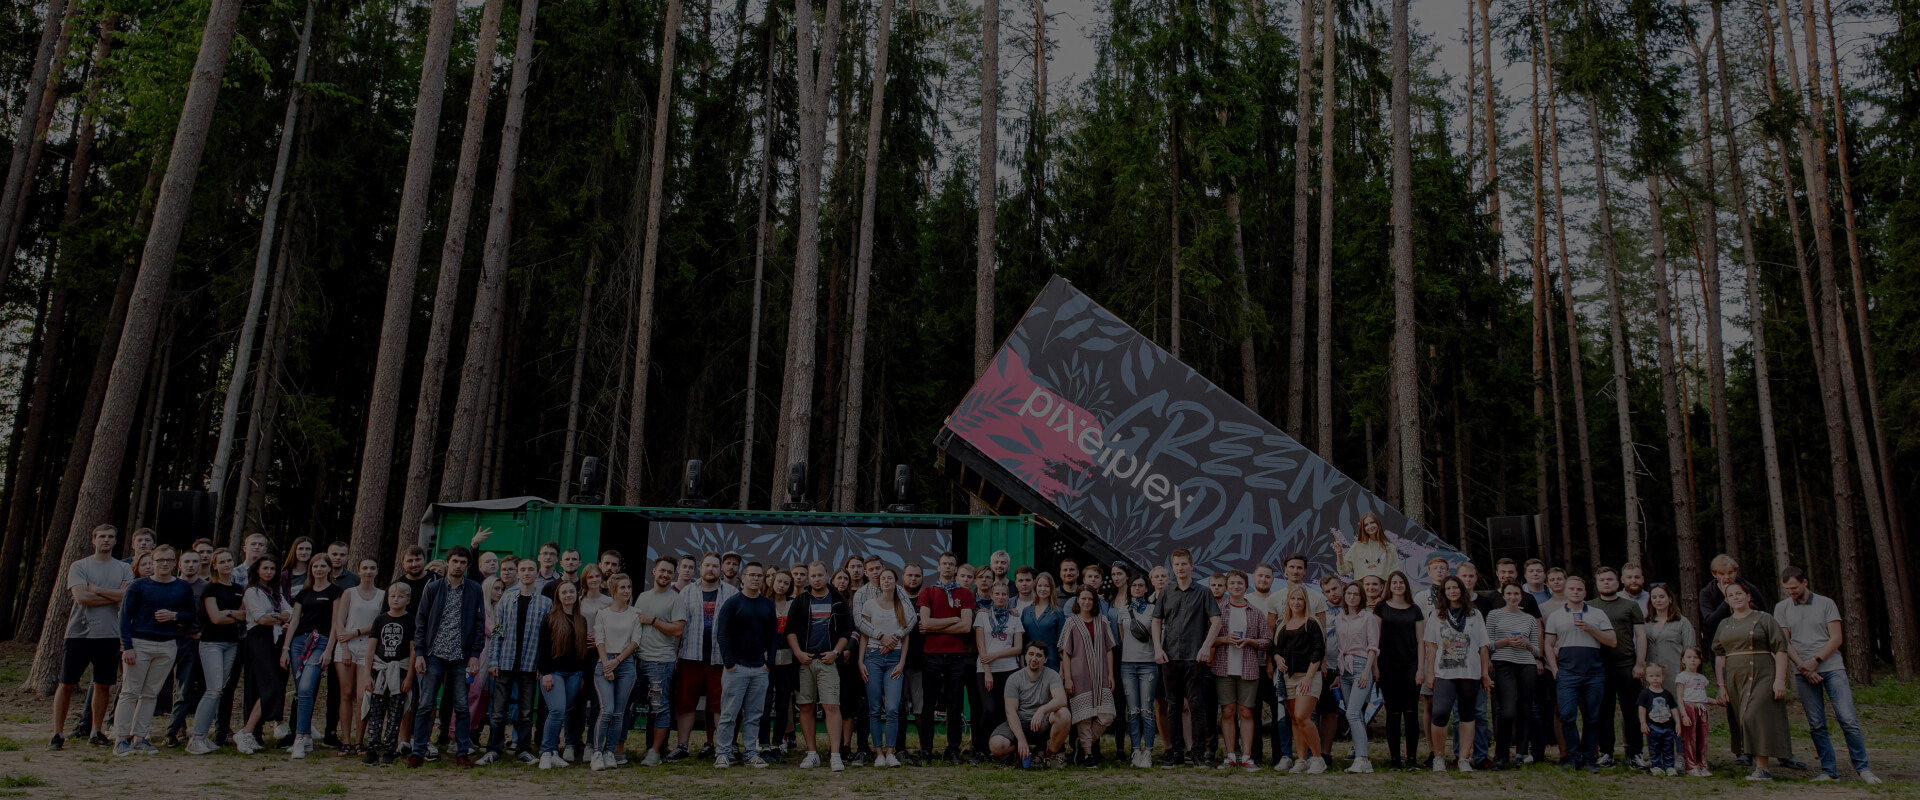 Панорамное фото сотрудников, которые стоят на фоне логотипа PixelPlex и лесного массива